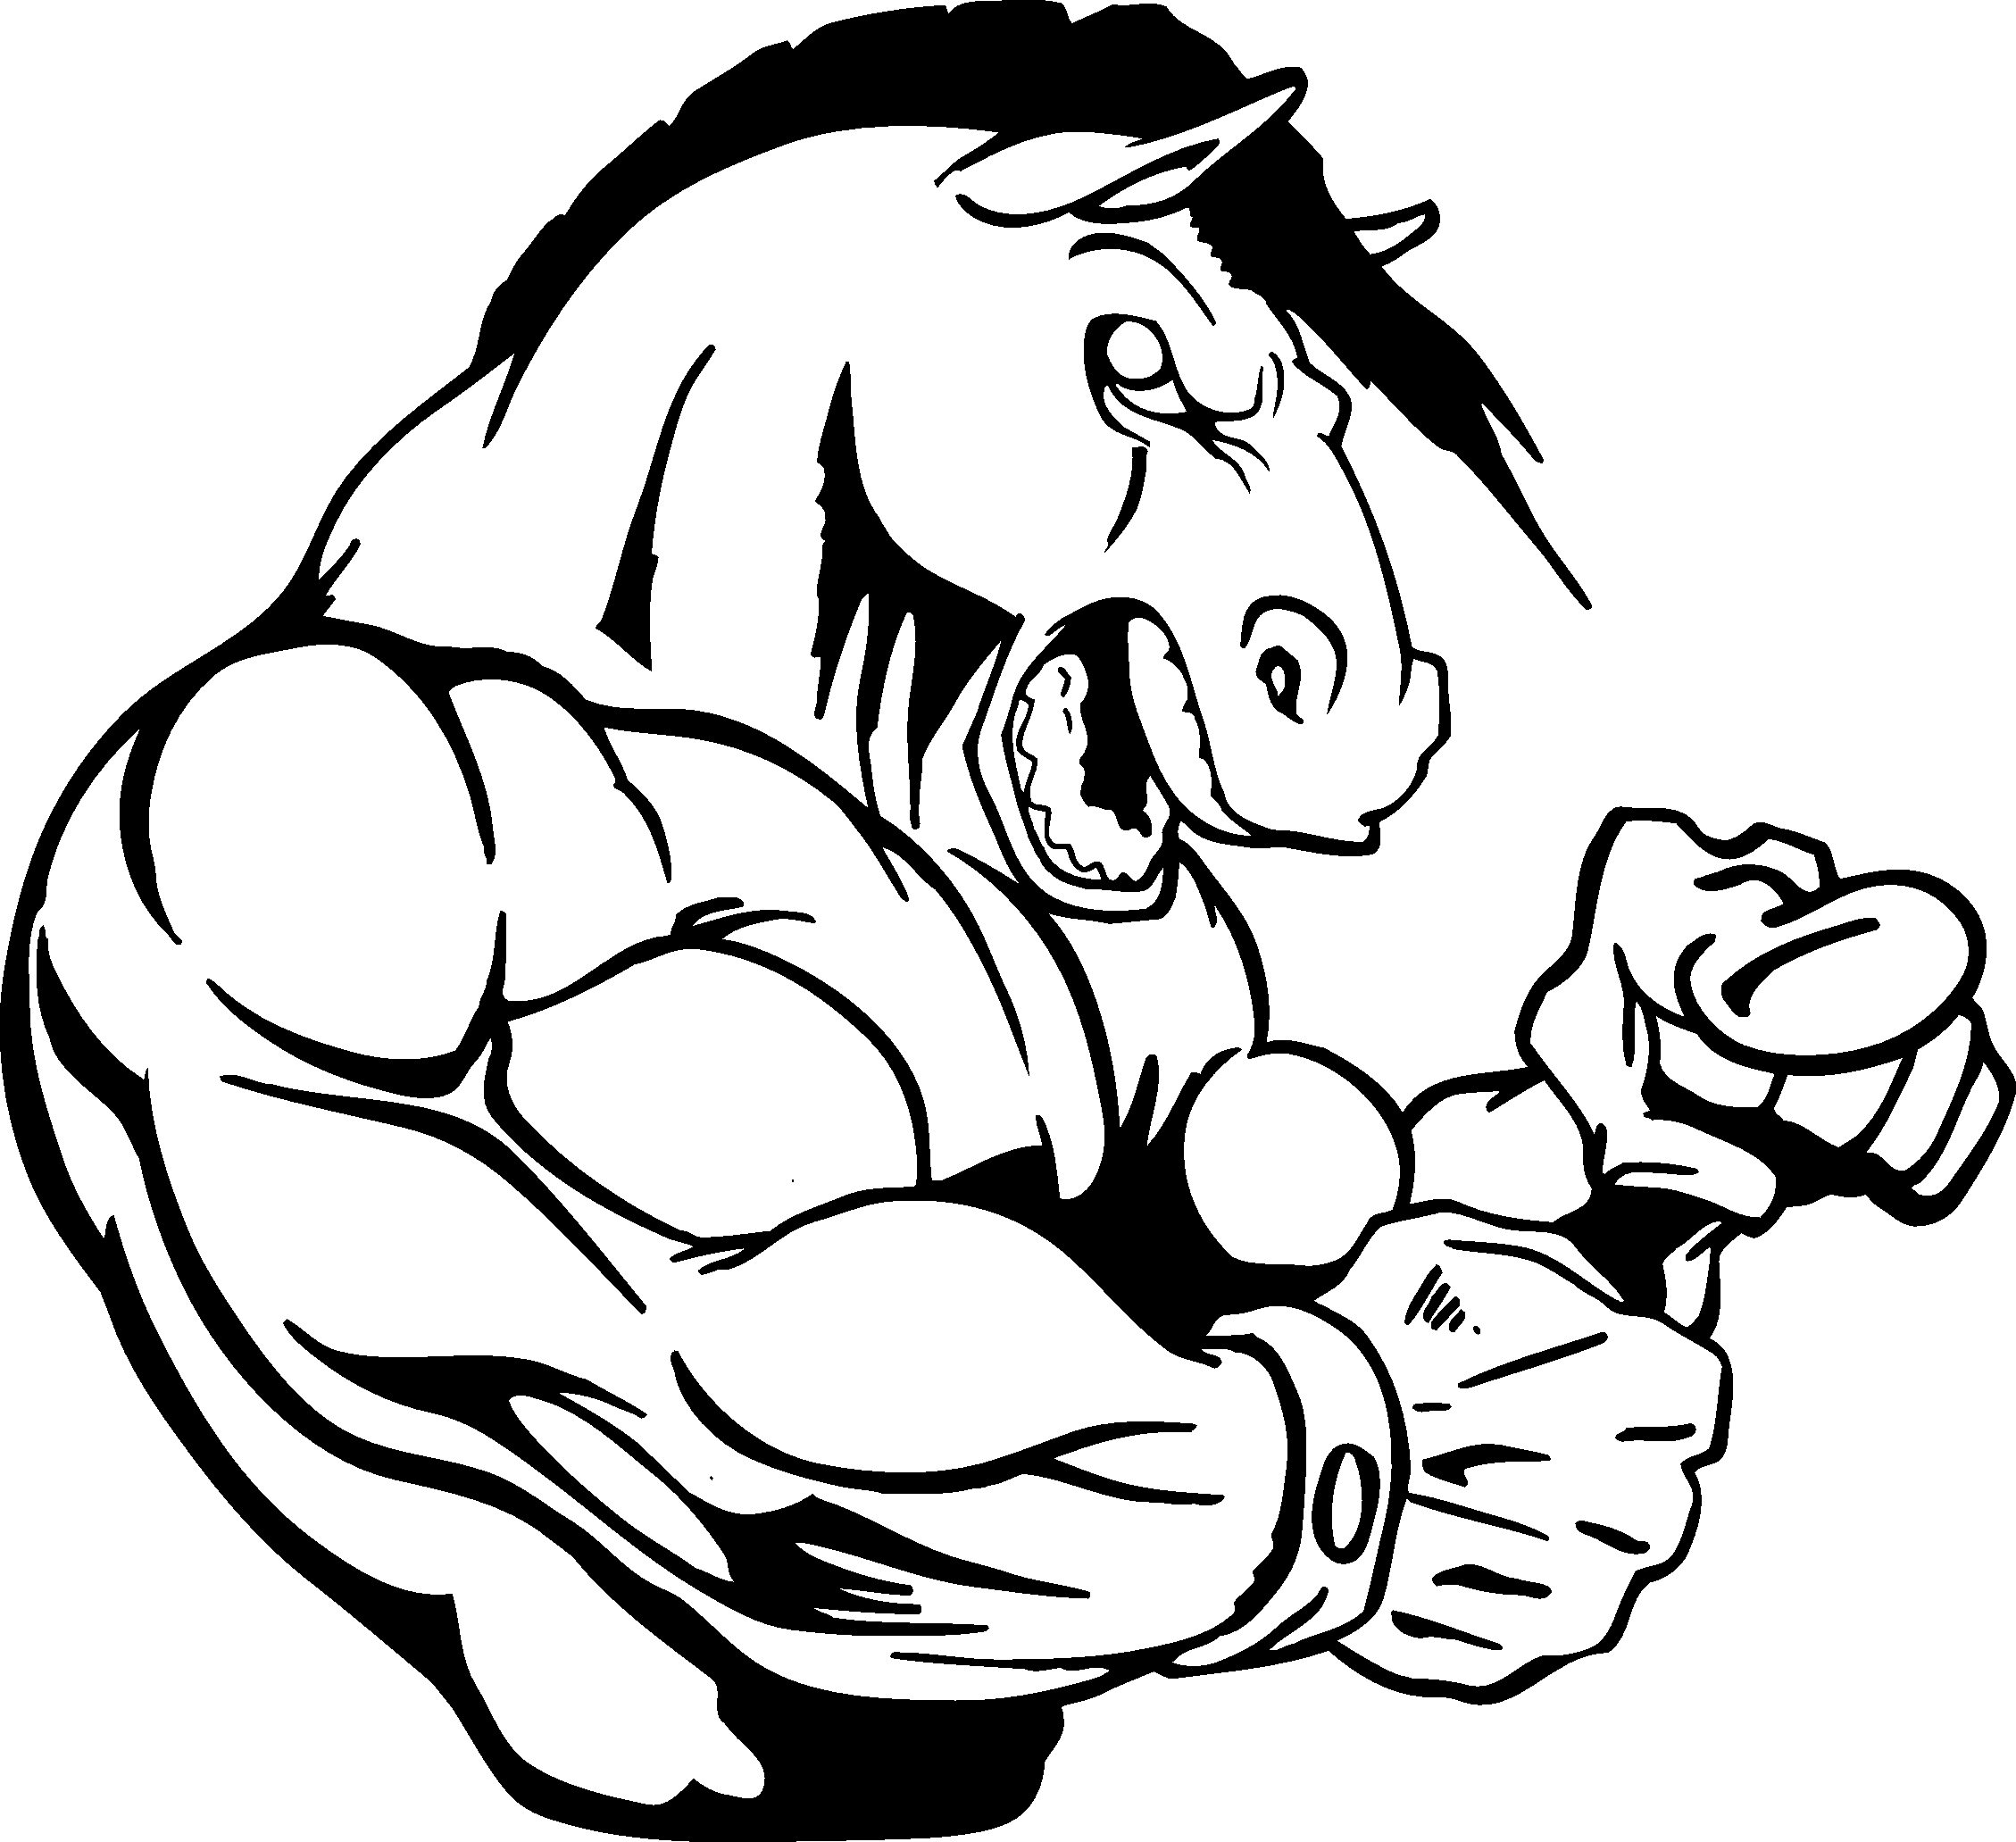 Pix For > Horse Mascot Logo